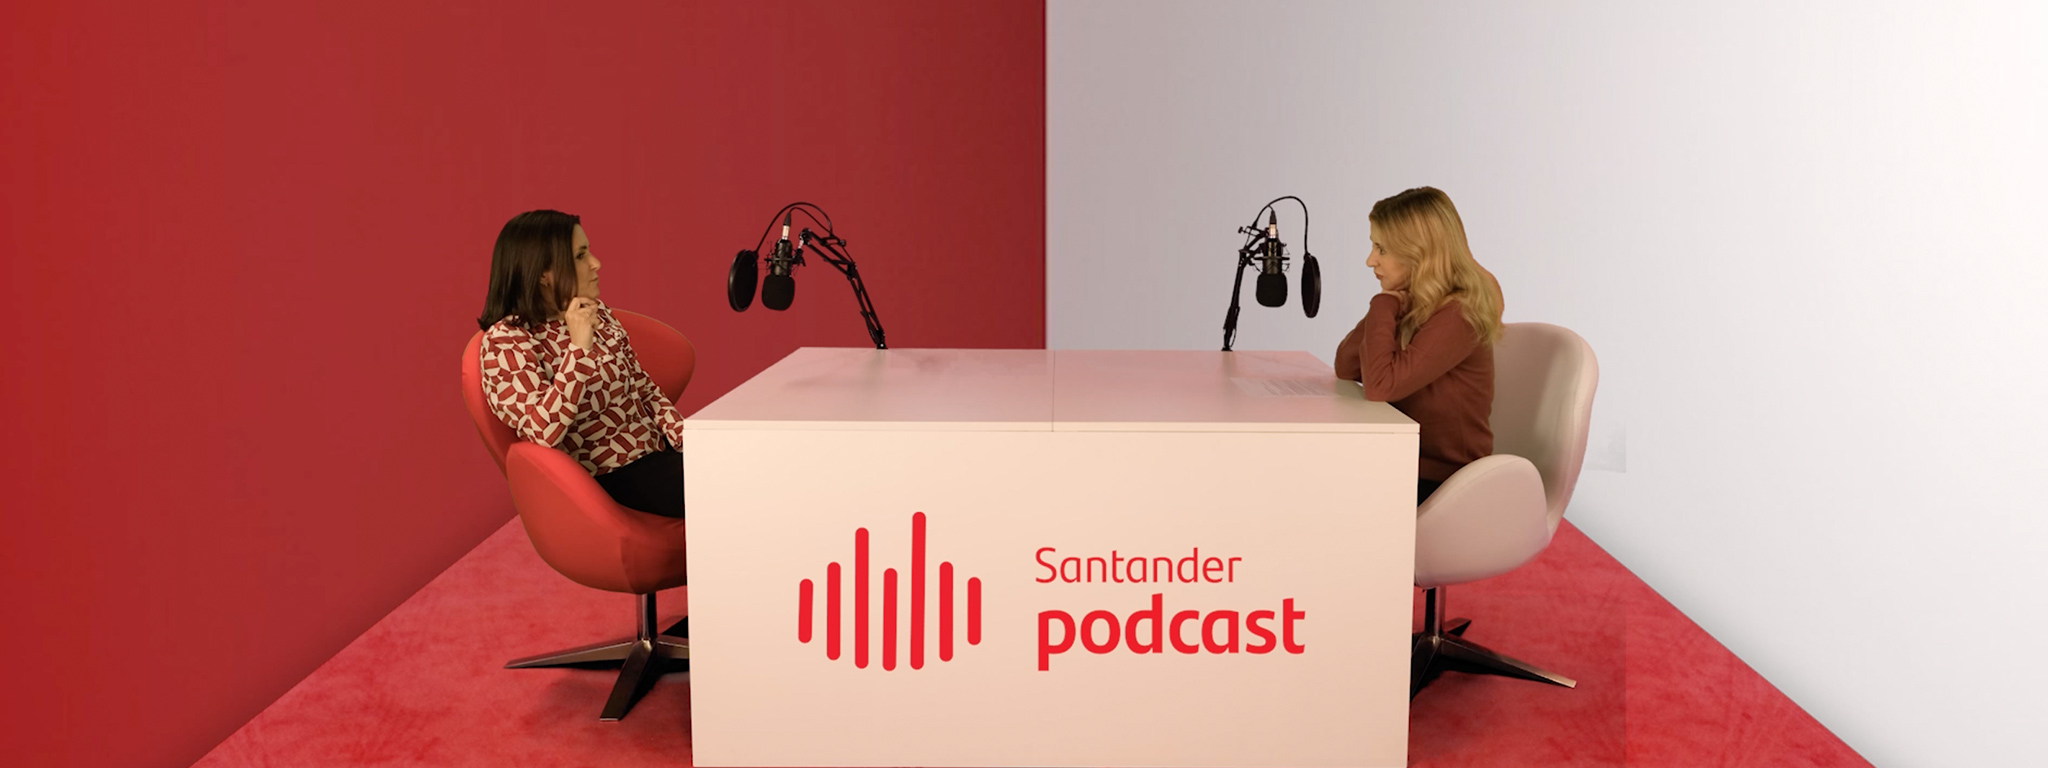 Isabel Guerreiro - Podcast Santander